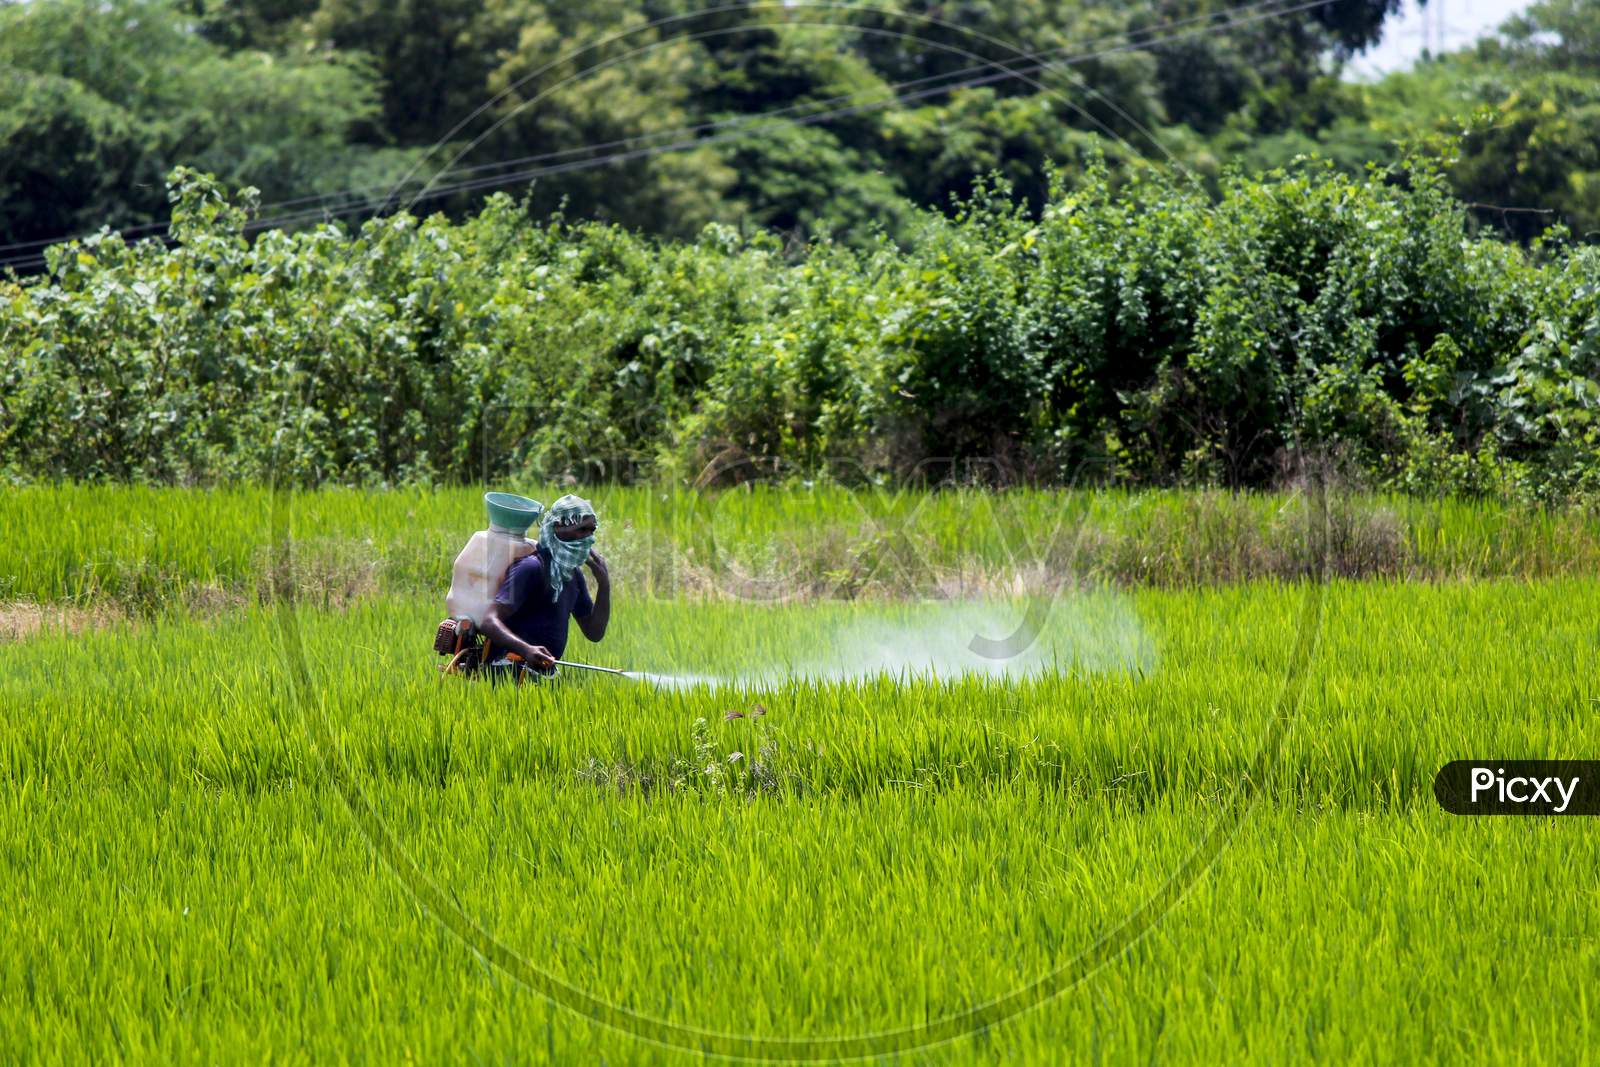 Farmer spraying pesticide spray on the paddy/rice crops